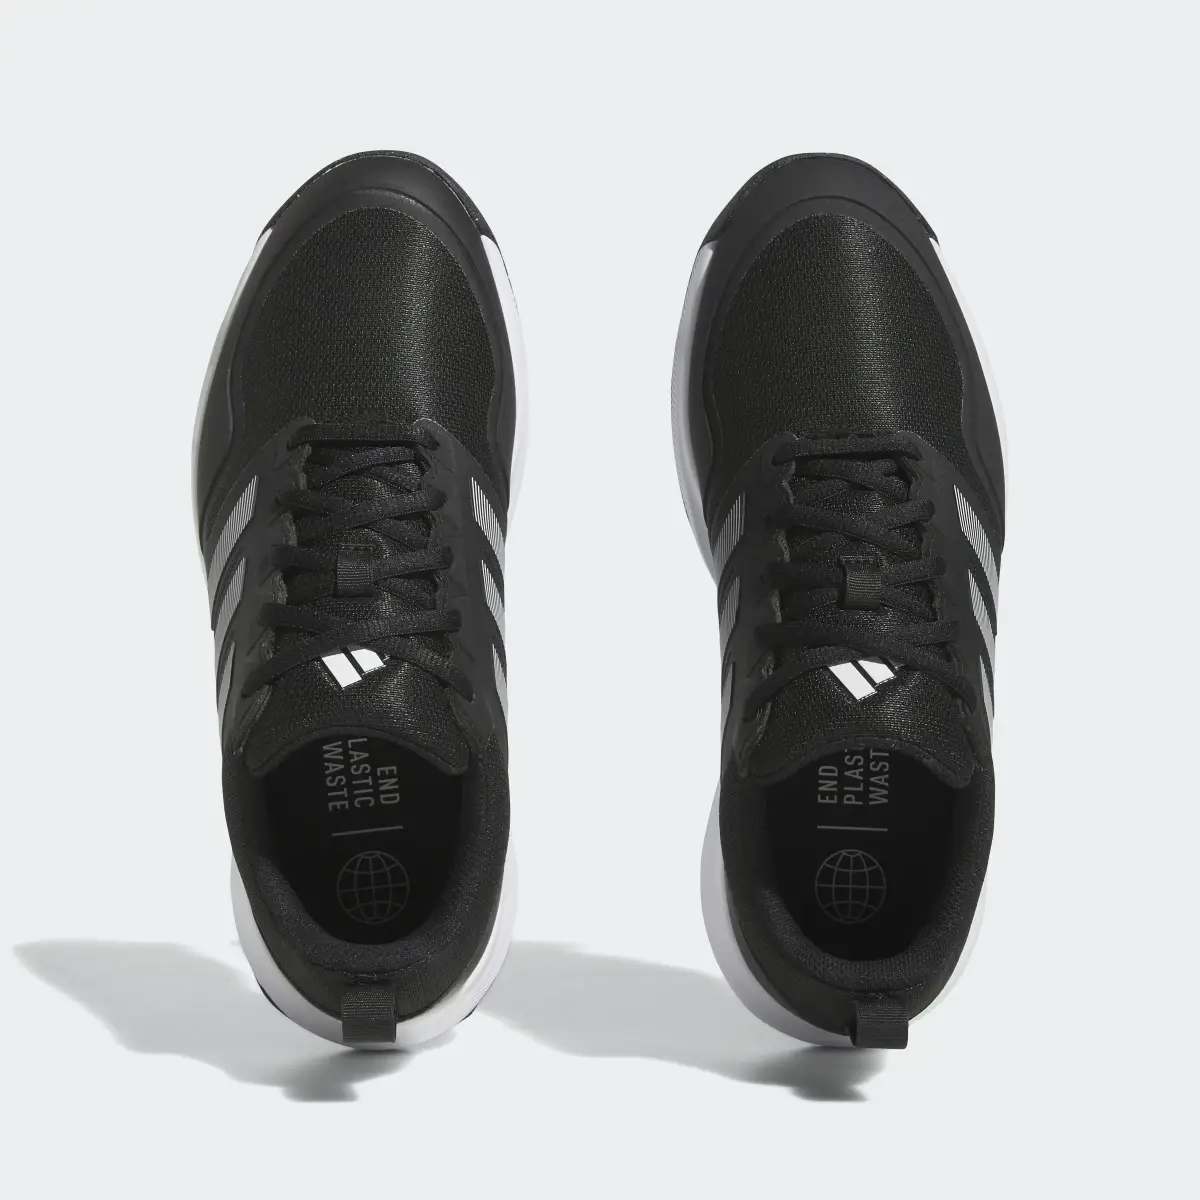 Adidas Tech Response SL 3.0 Golf Shoes. 3